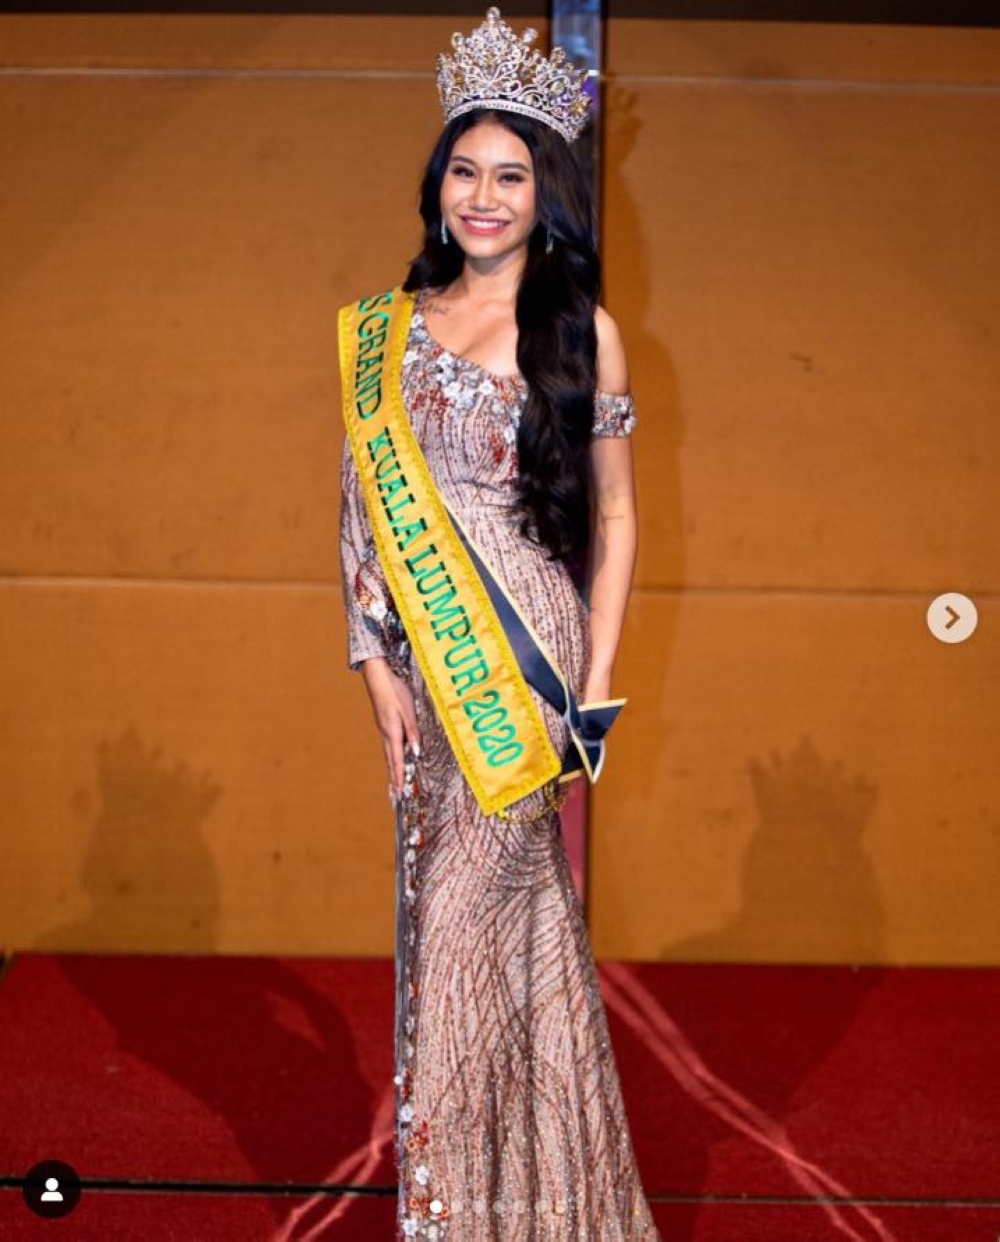 Melissa won the Miss Grand Kuala Lumpur 2020 pageant. — Screengrab from Melissa's social media account